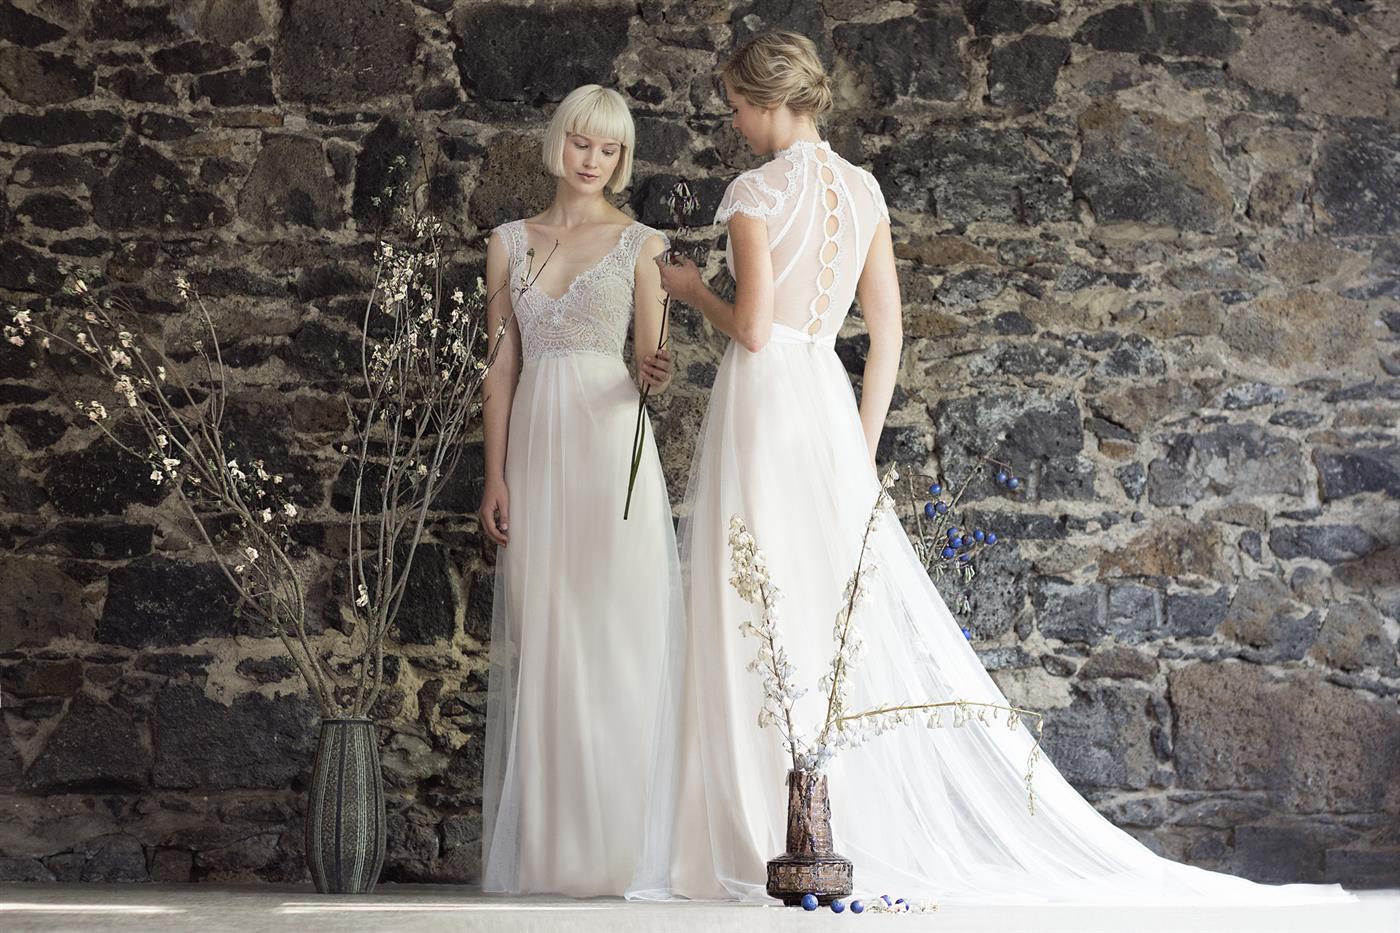 Gwendolynne White - Arielle and Tianna Wedding Dresses